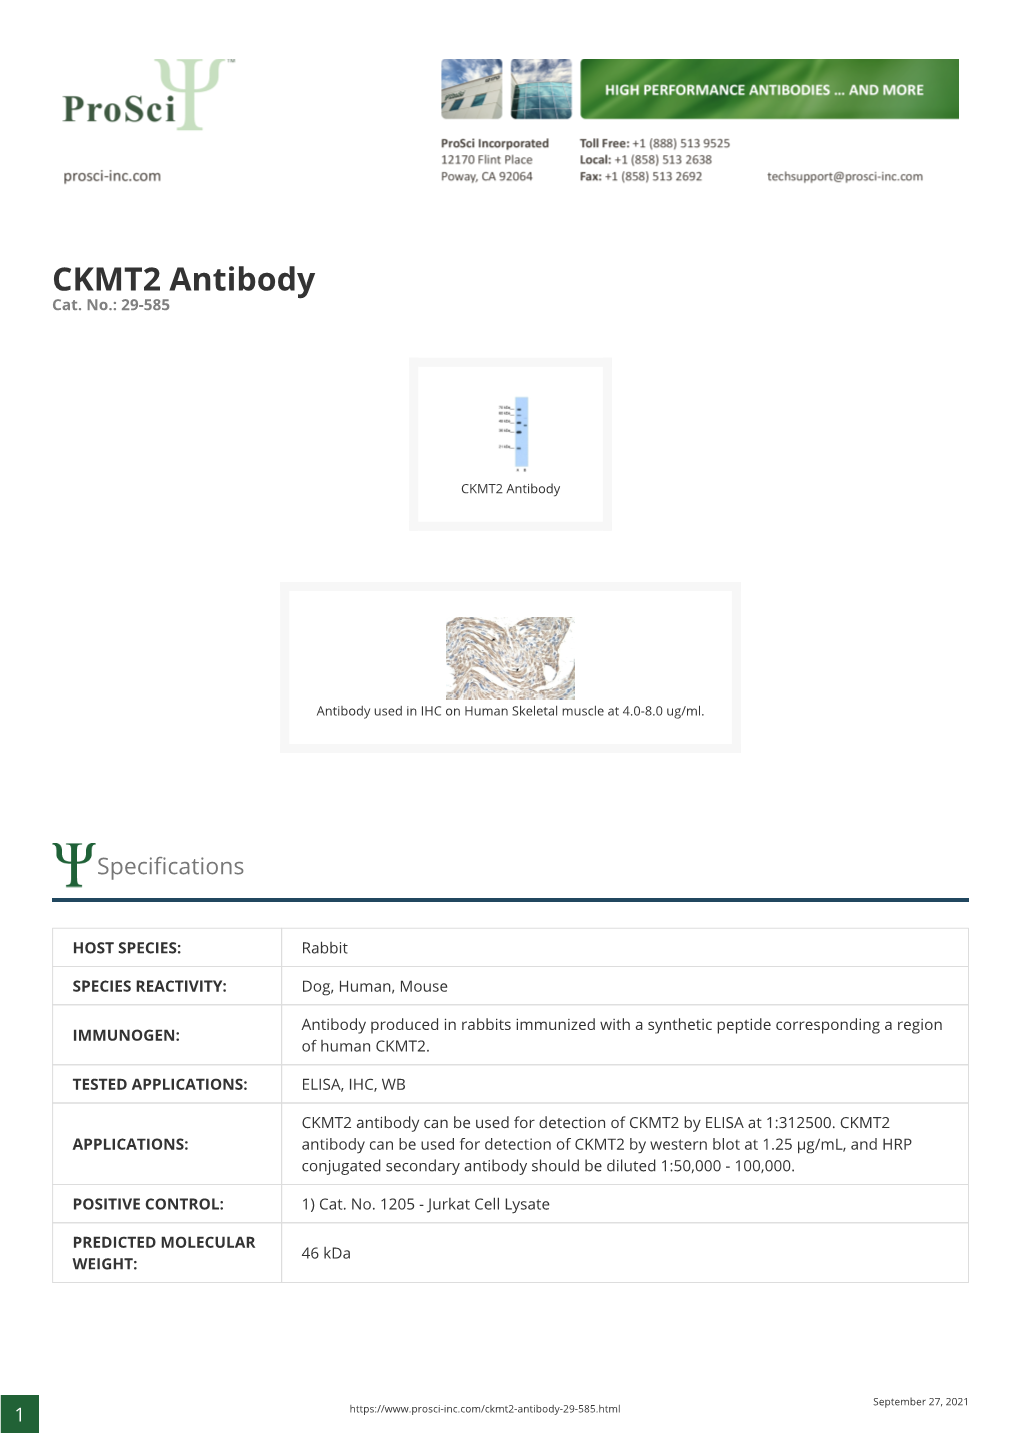 CKMT2 Antibody Cat